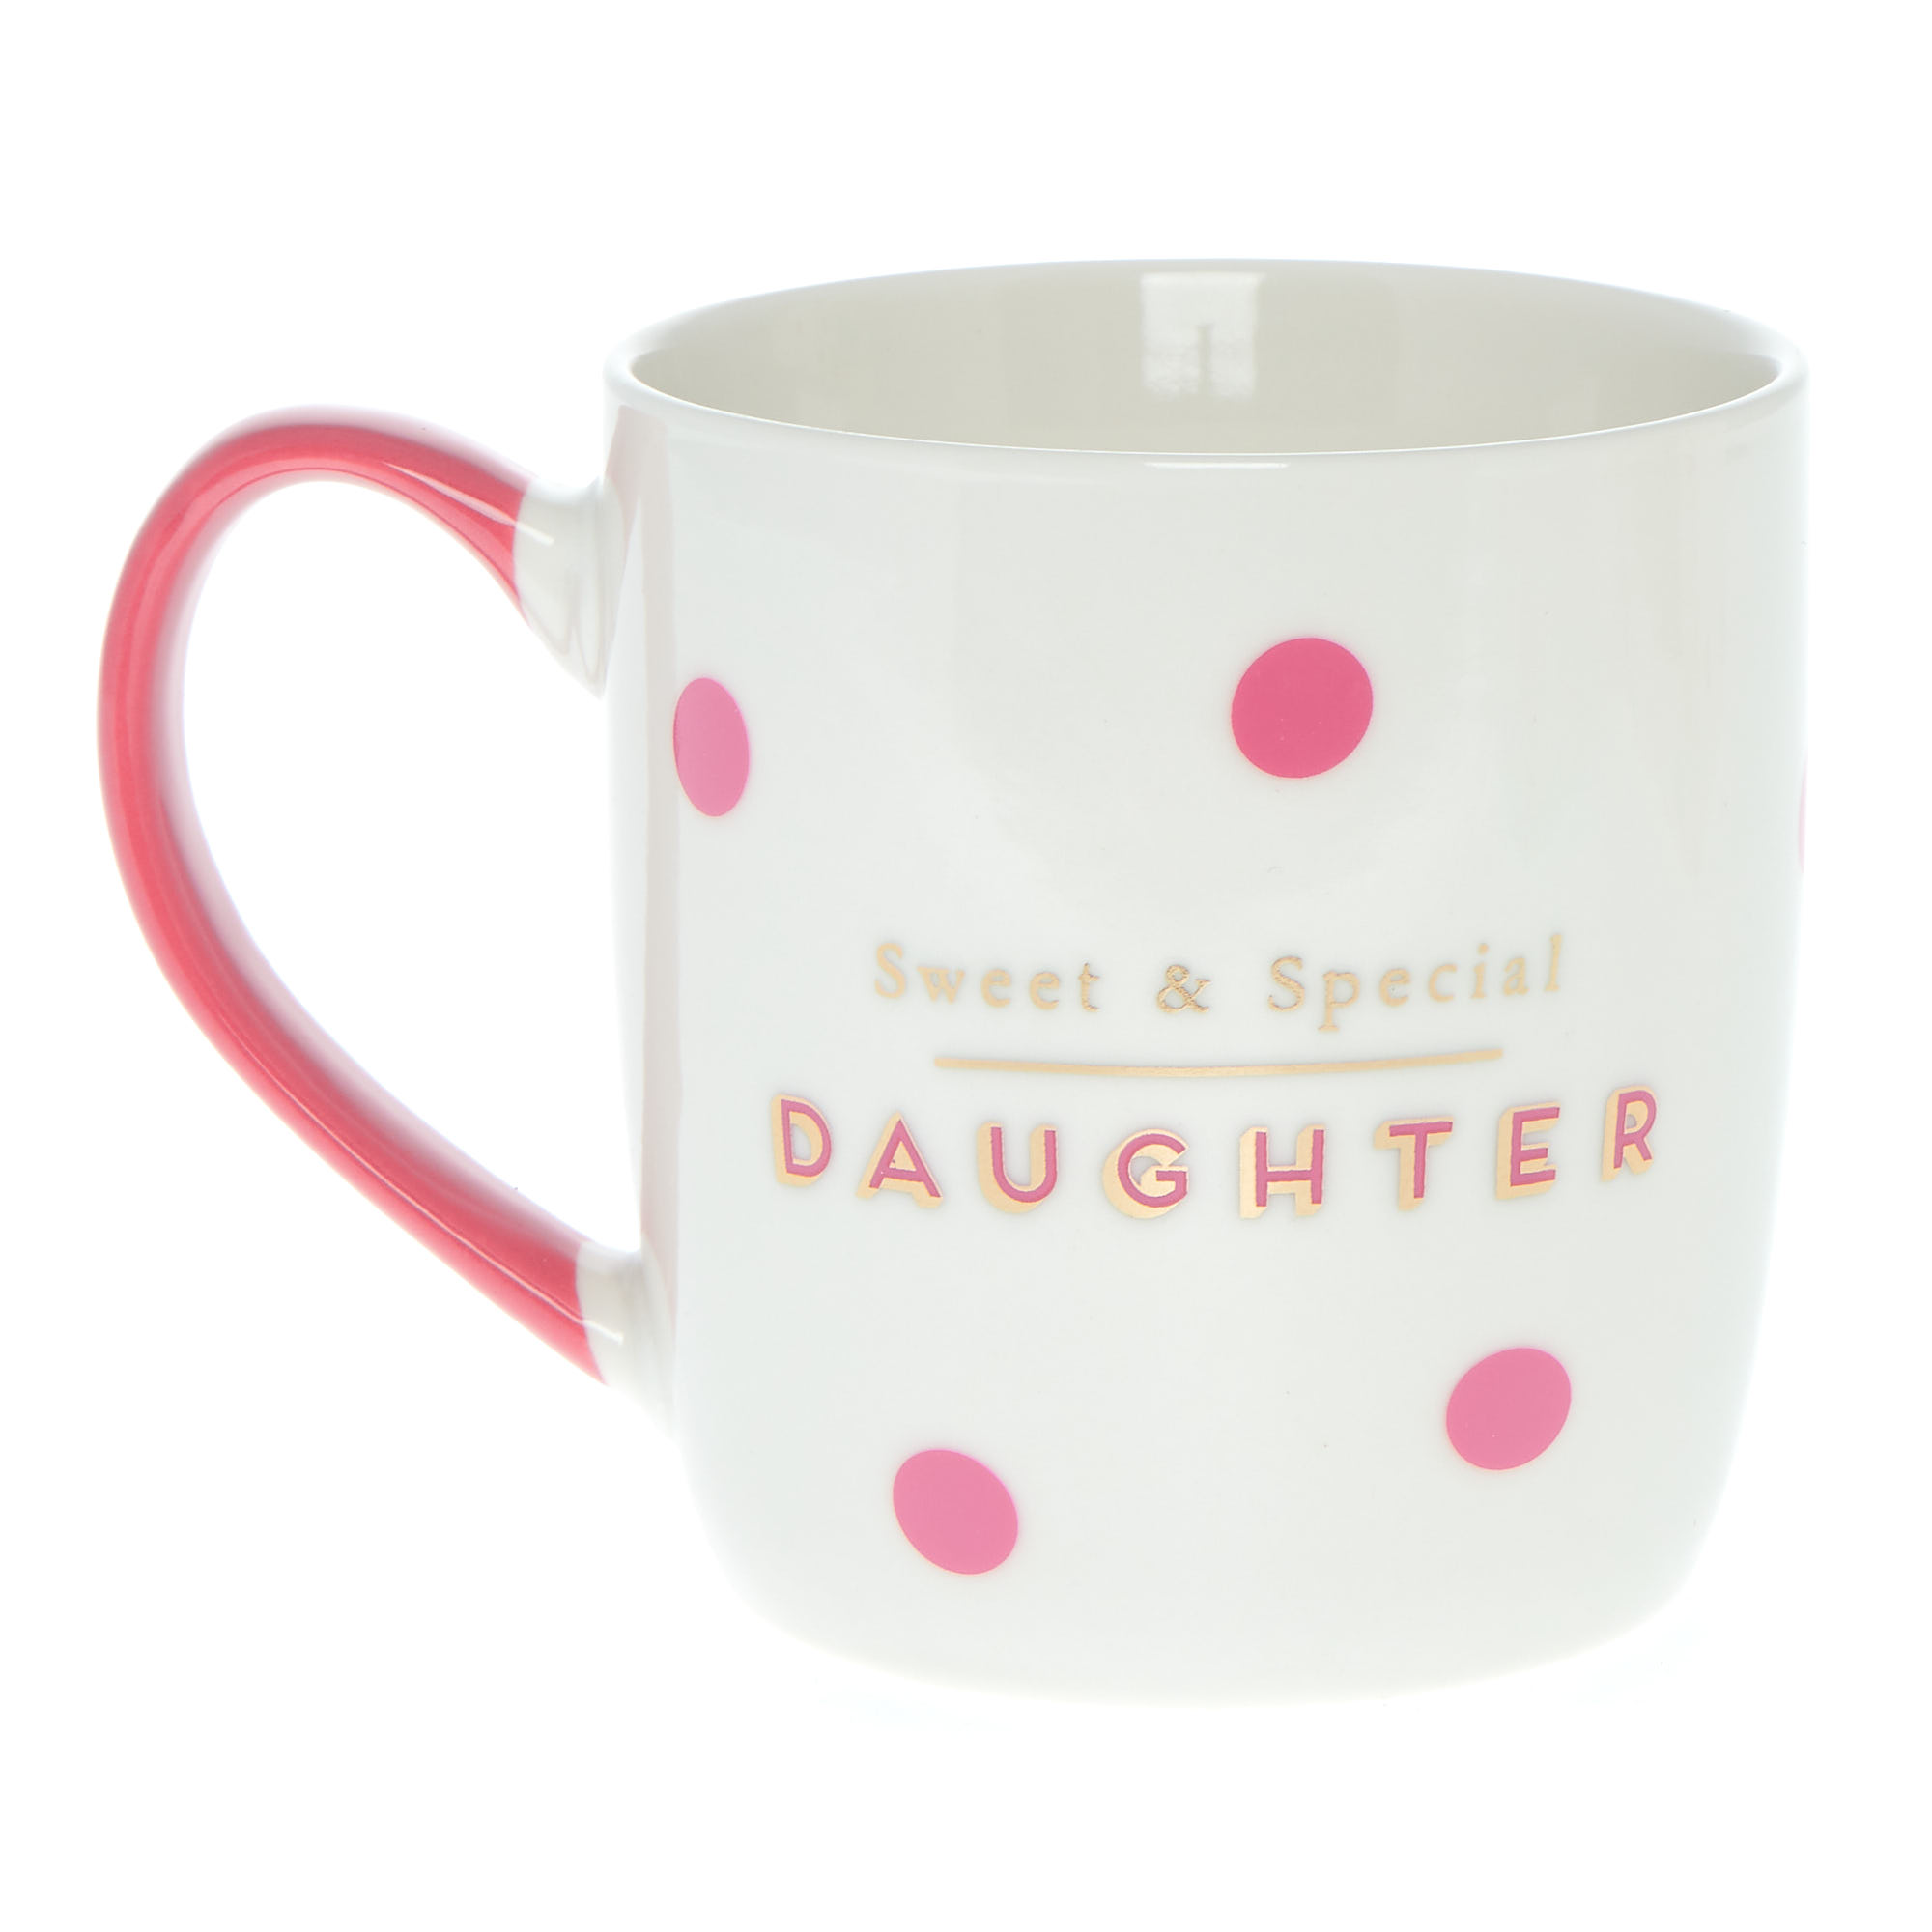 Sweet & Special Daughter Mug & Socks Gift Set 